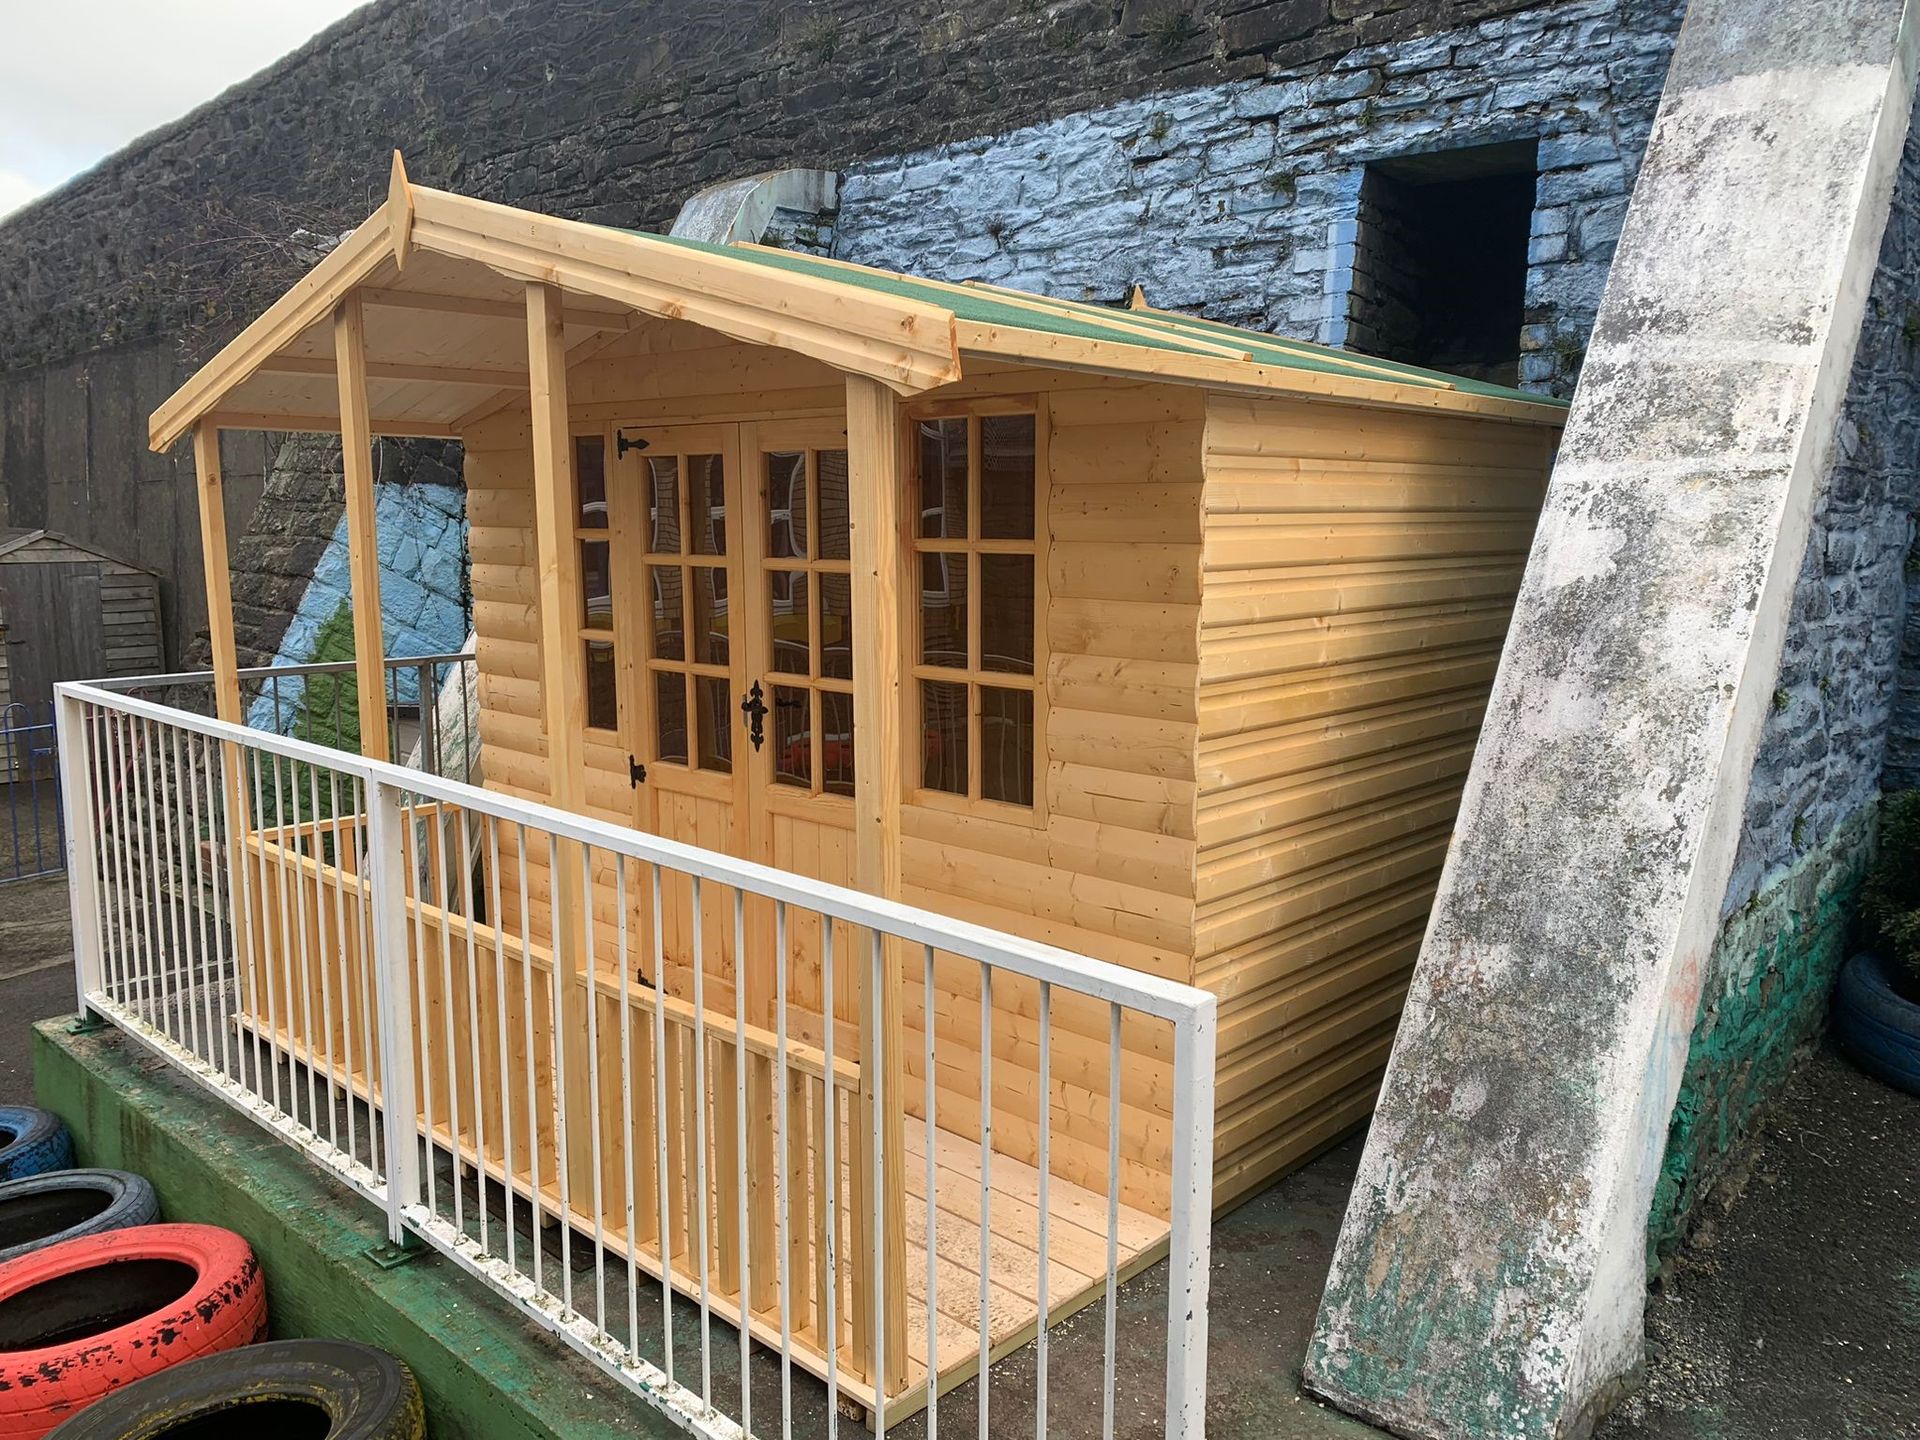 A summerhouse delivered to Cilfynydd Primary school